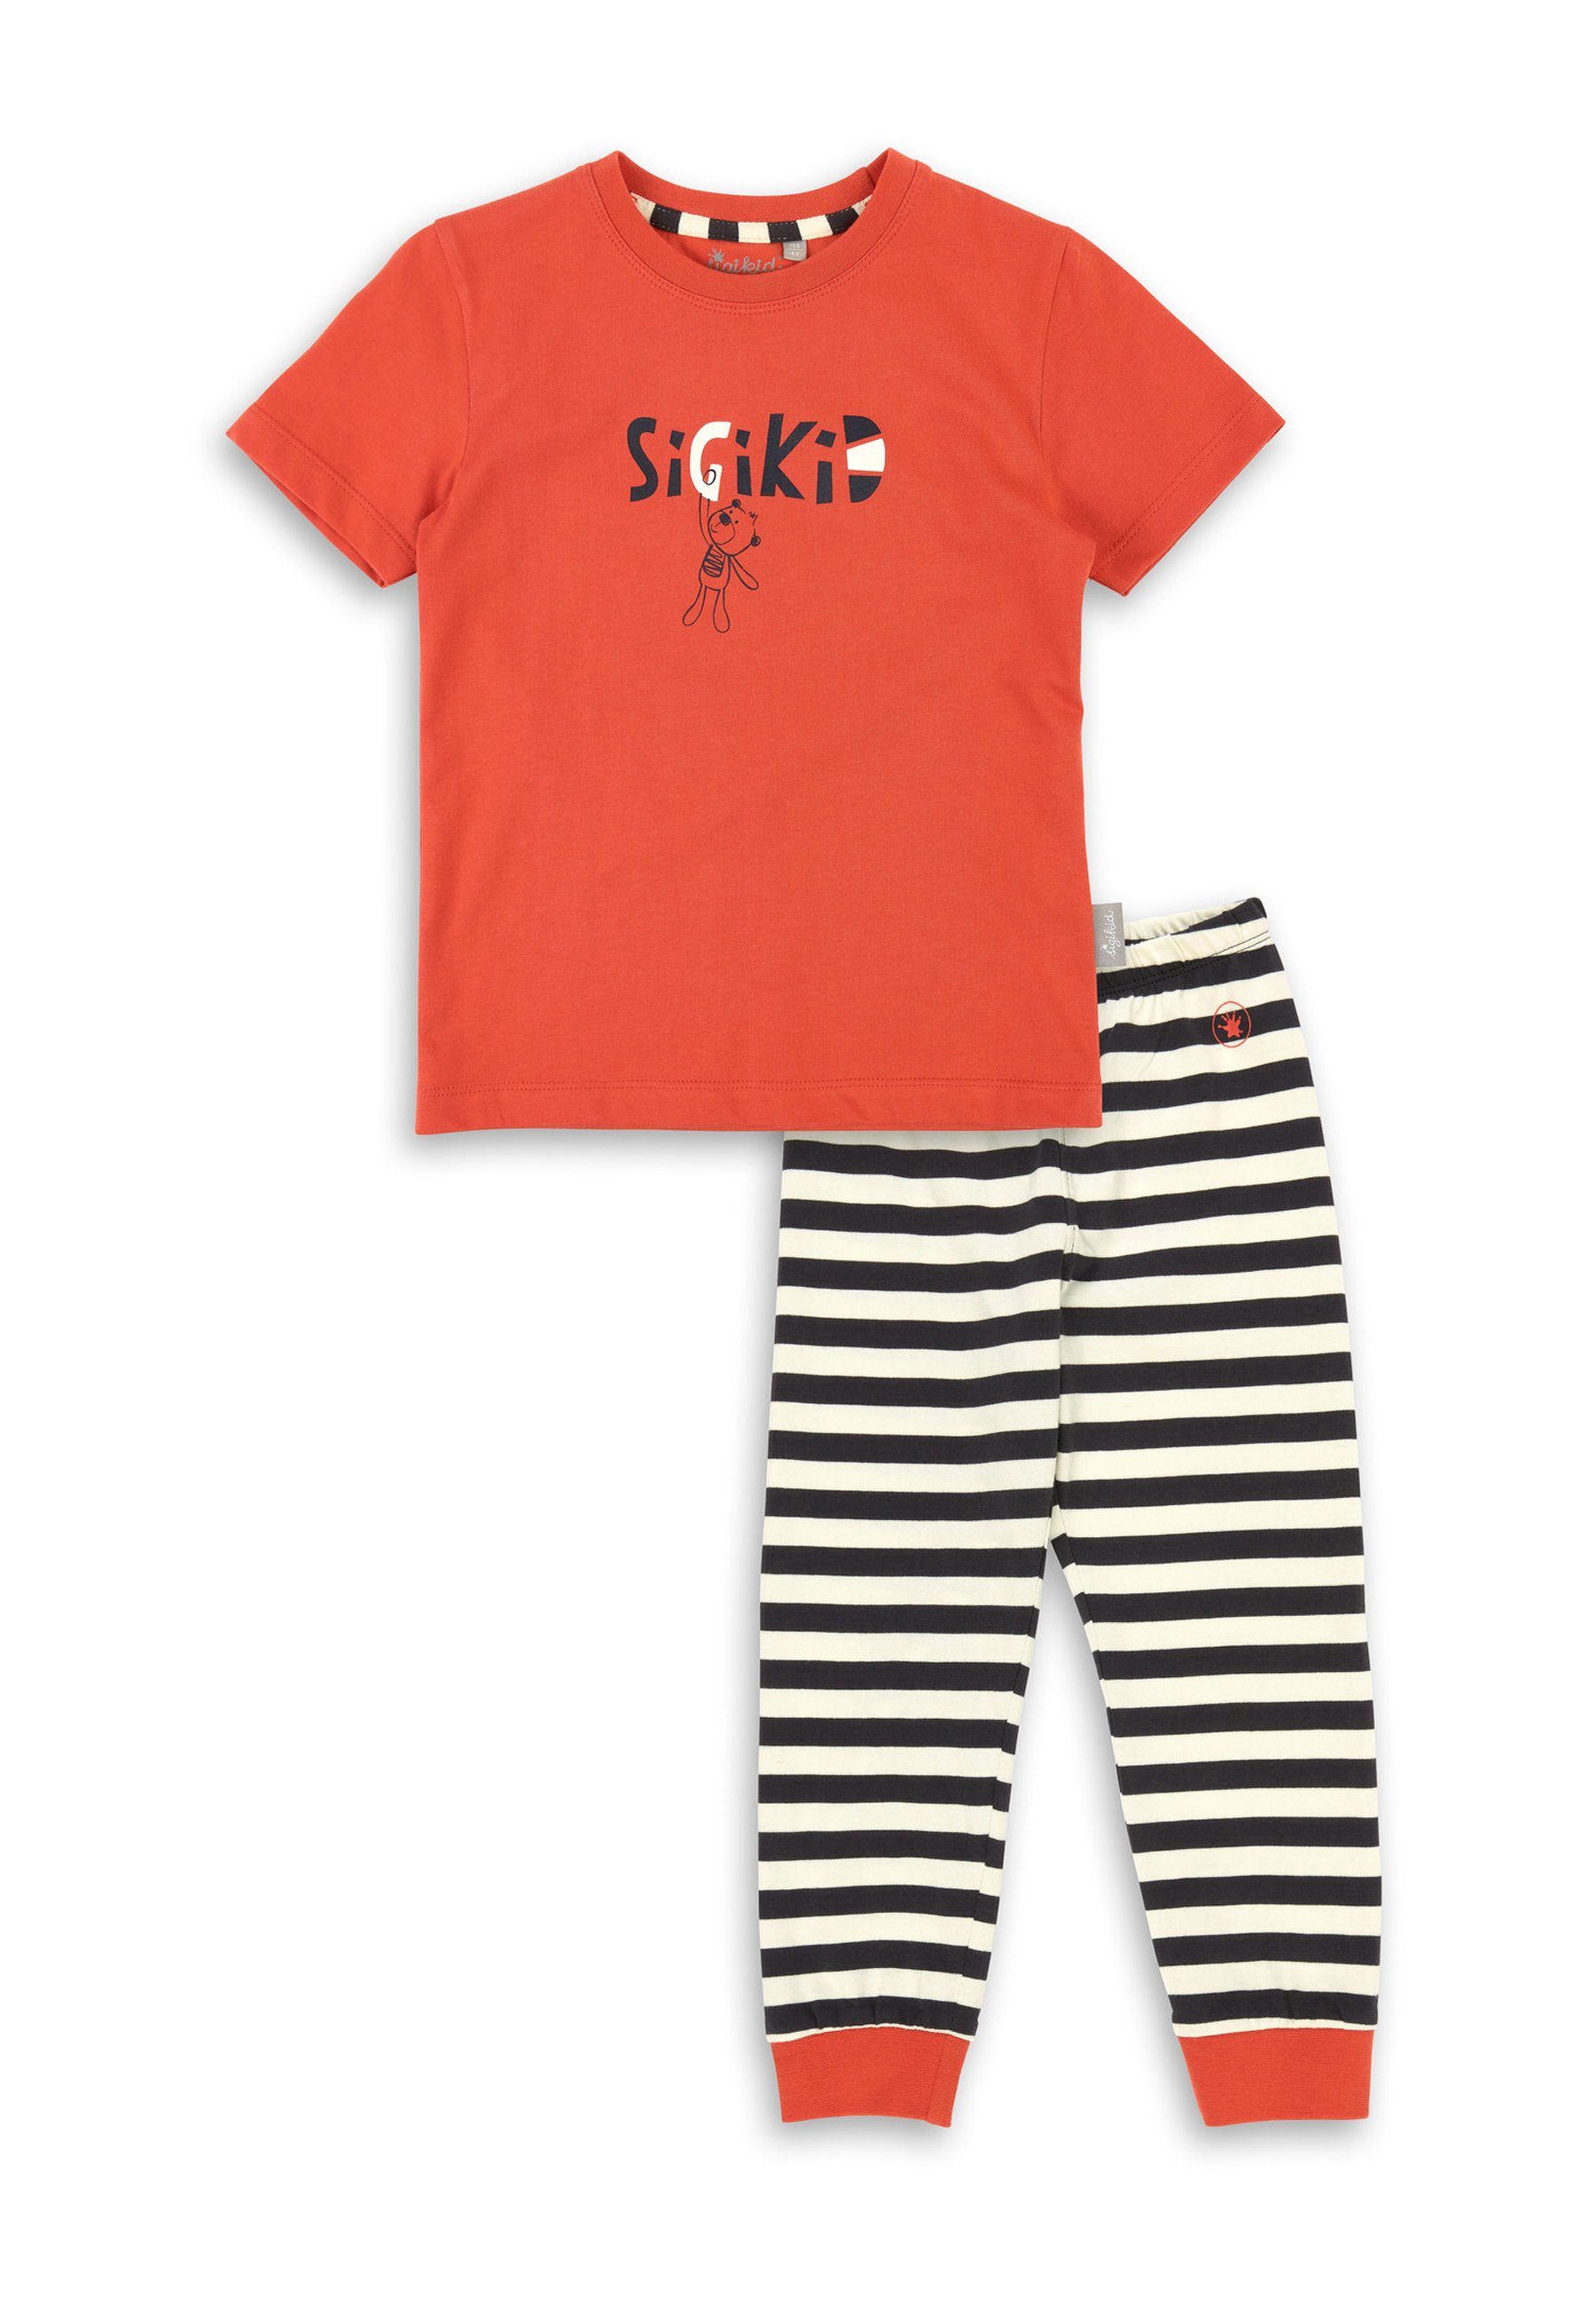 Sigikid Pyjama Kinder Nachtwäsche Pyjama (2 tlg) rot/schwarz/weiß | Schlafanzüge